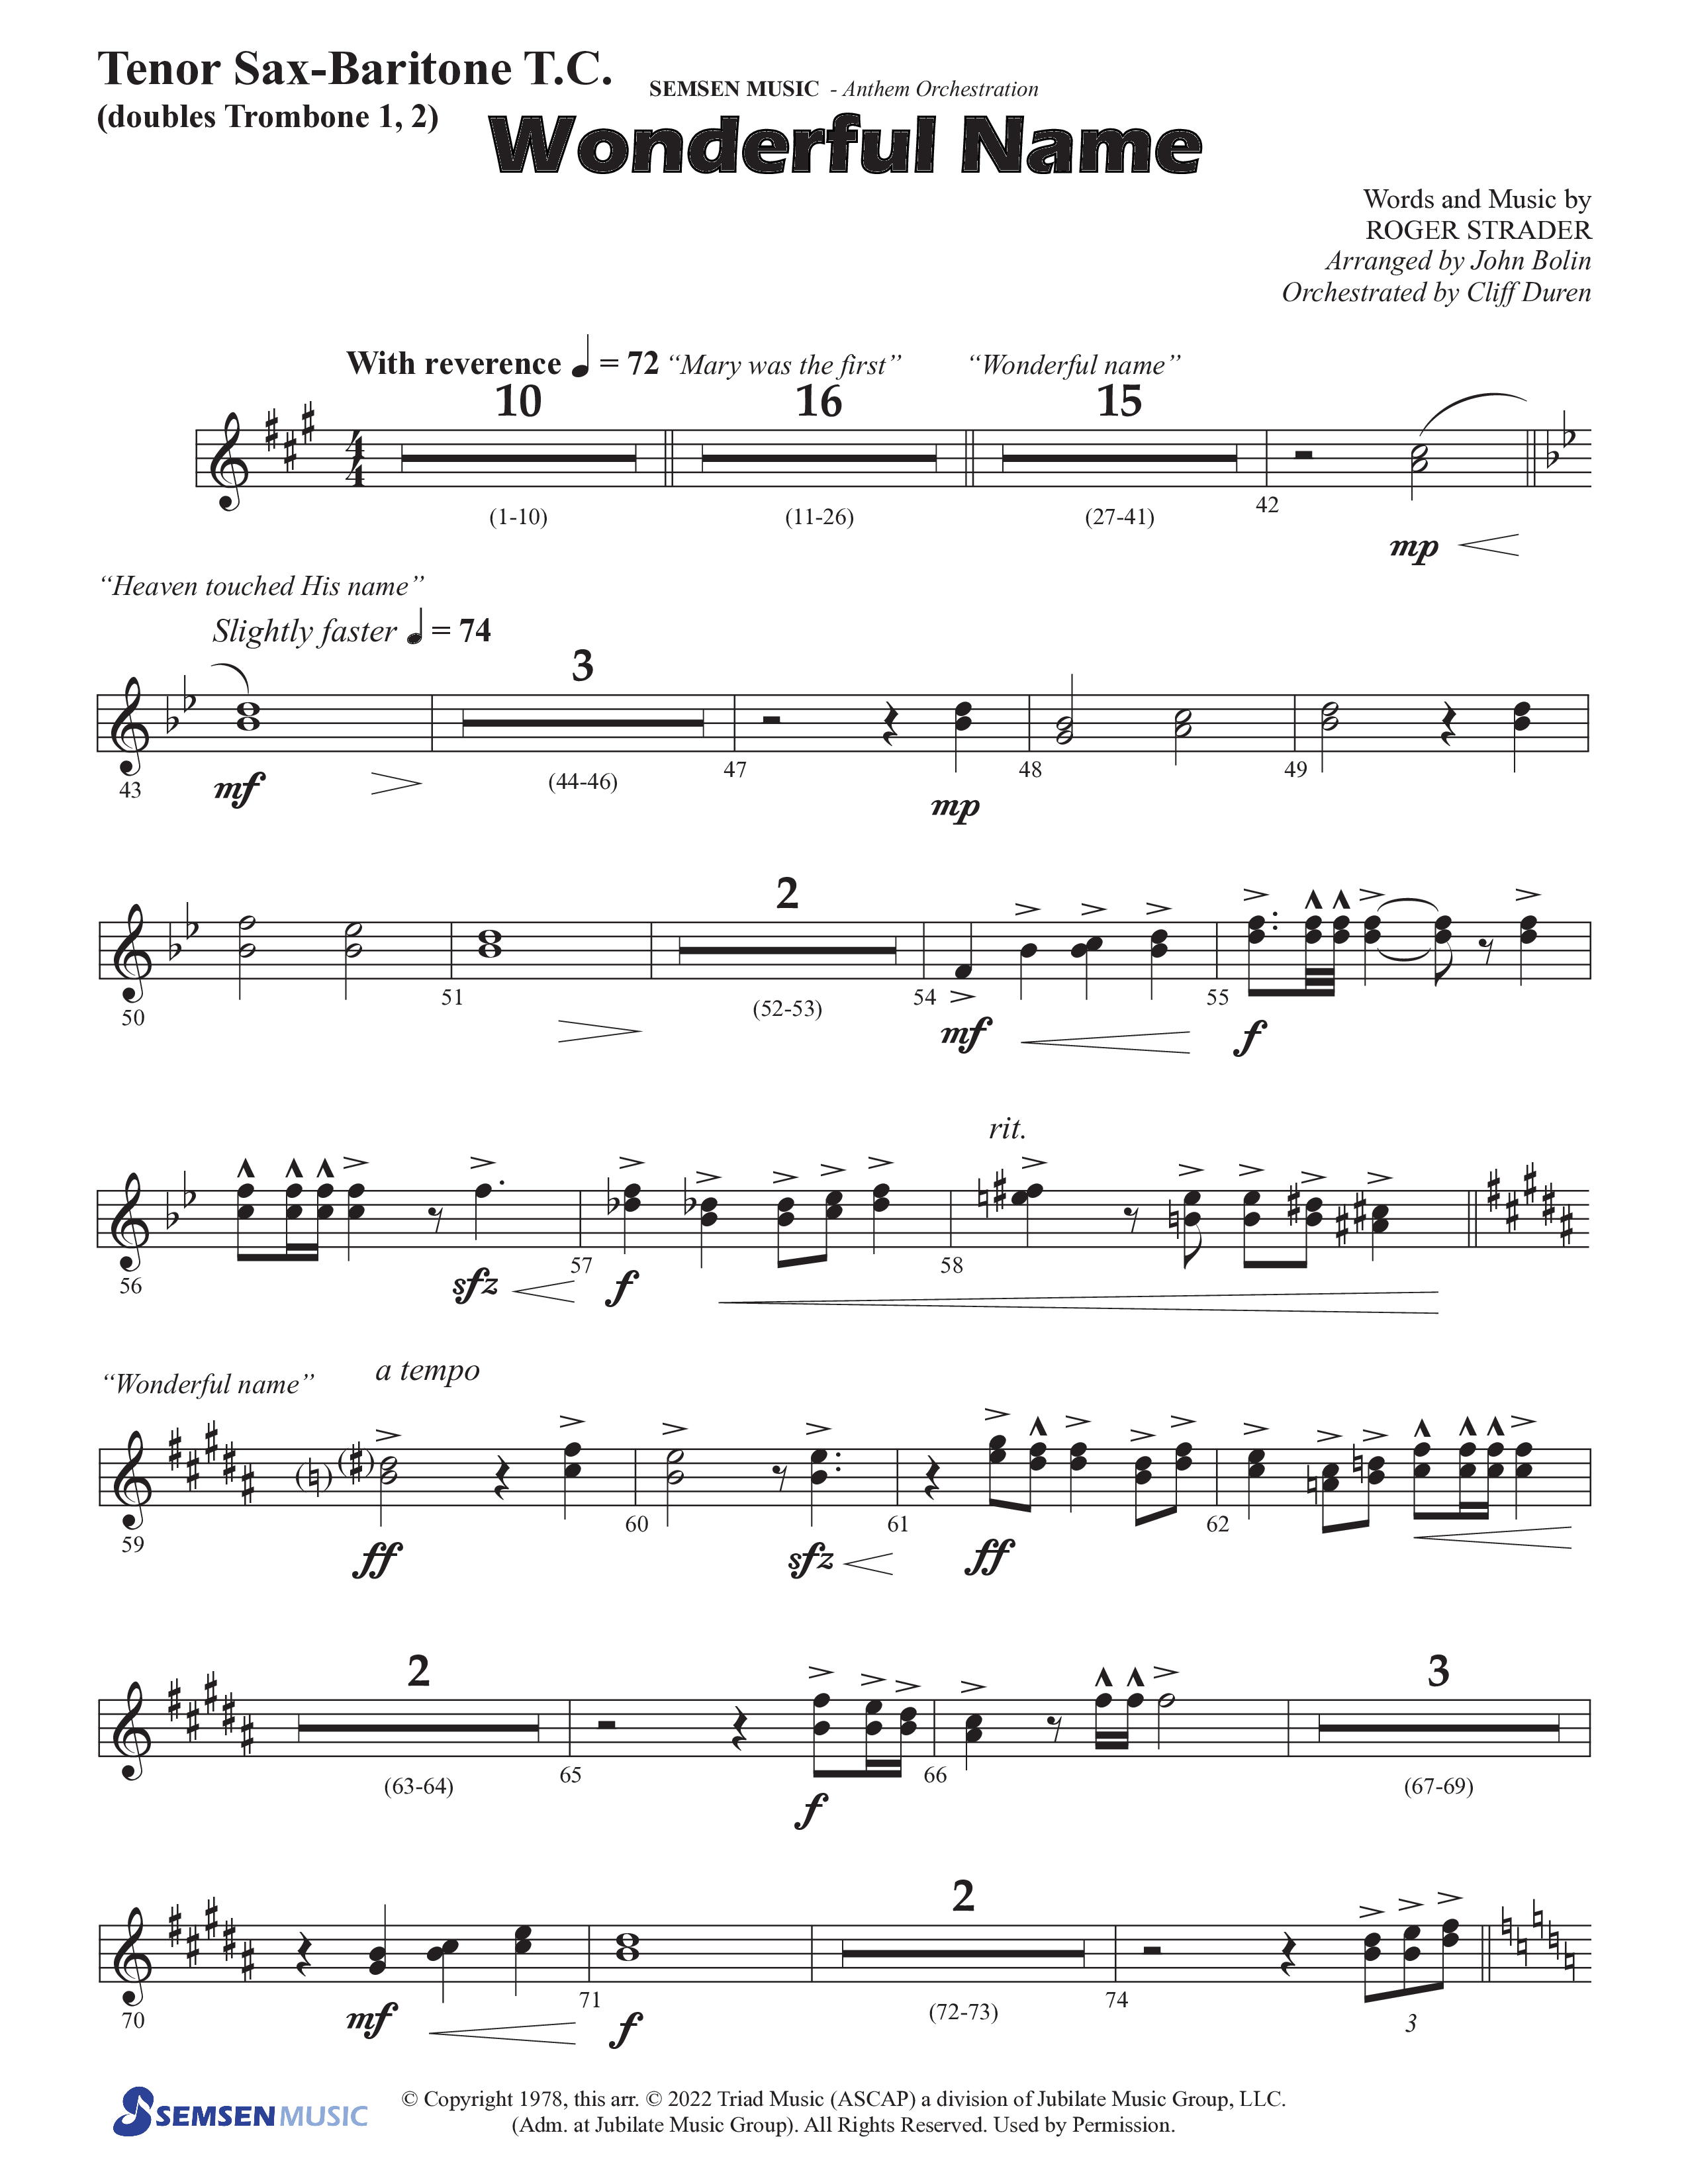 Wonderful Name (Choral Anthem SATB) Tenor Sax/Baritone T.C. (Semsen Music / Arr. John Bolin / Orch. Cliff Duren)